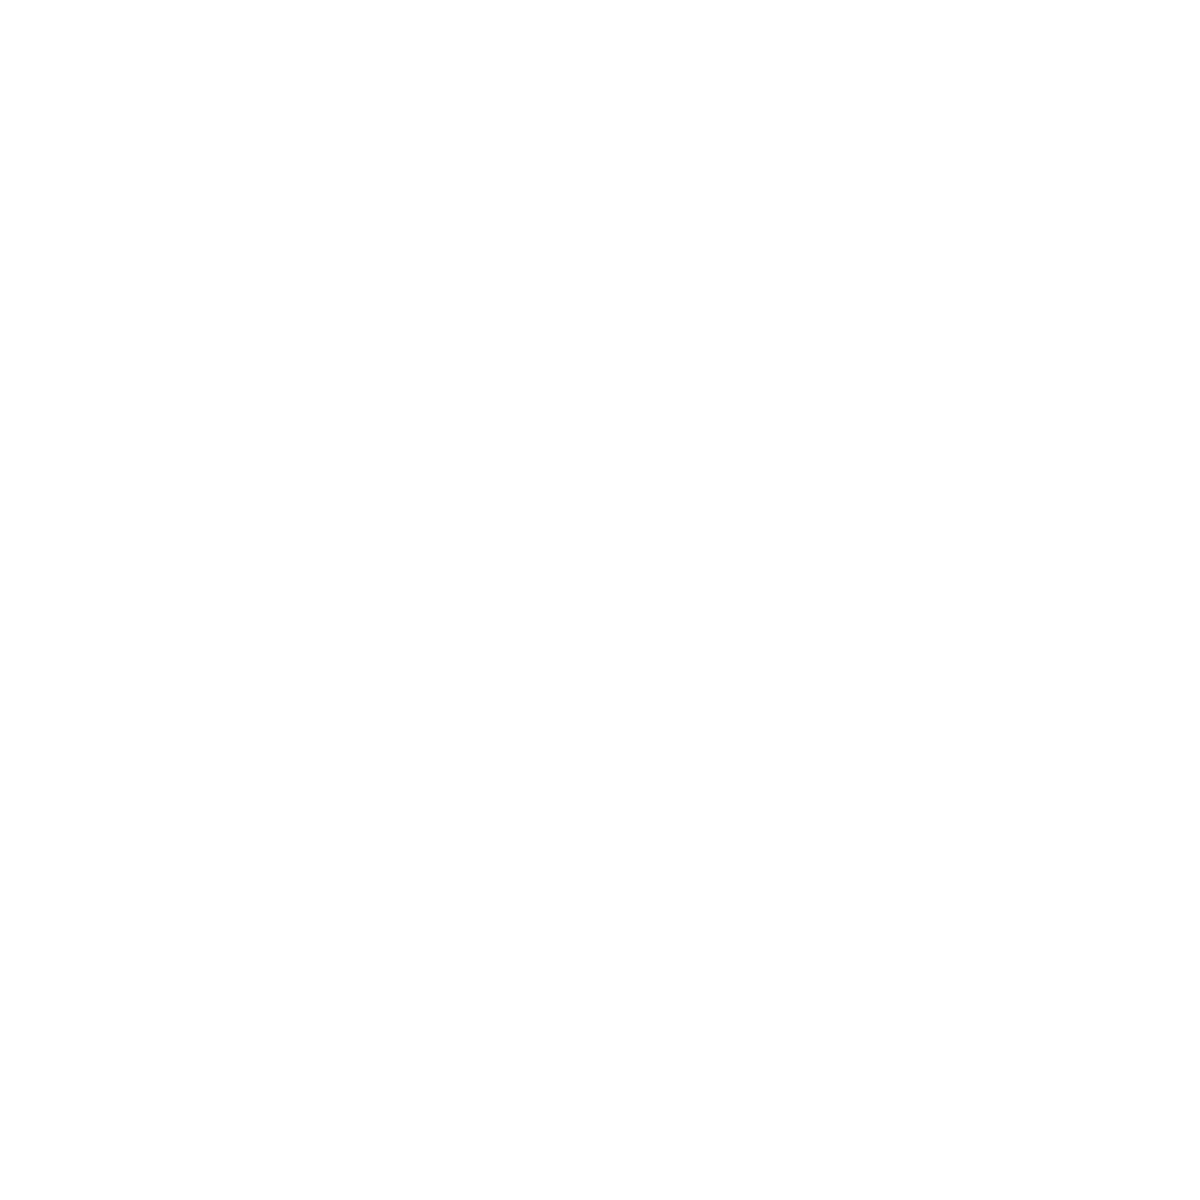 Edit icon and WordPress logo